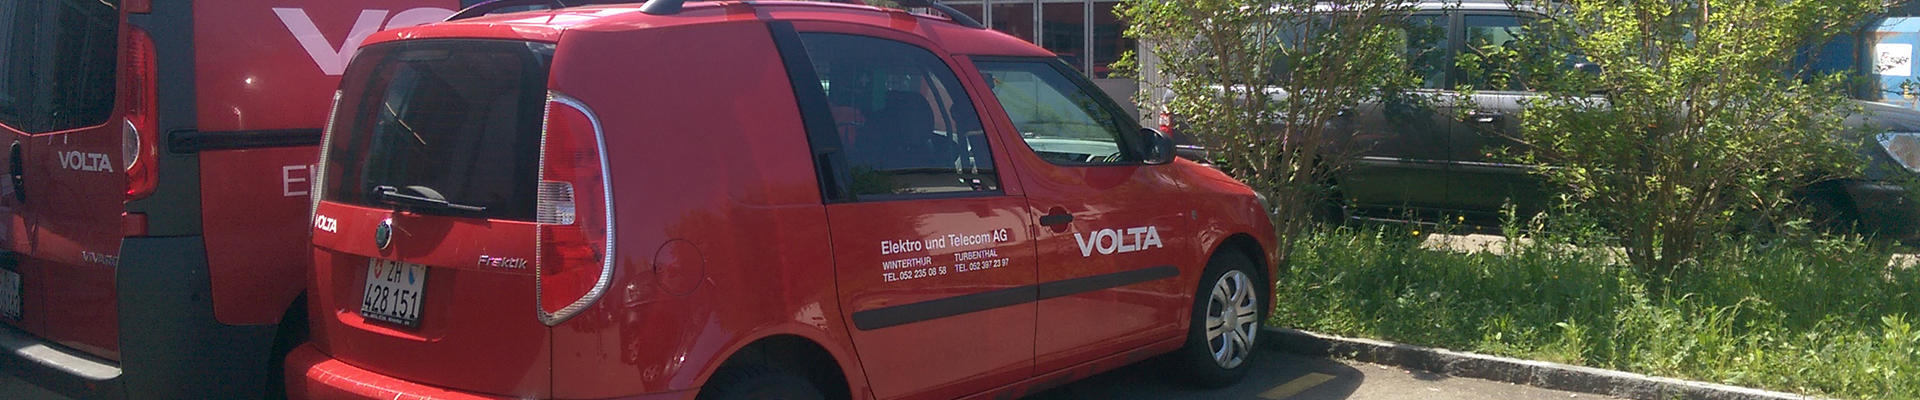 Bilder VOLTA Elektro und Telecom AG